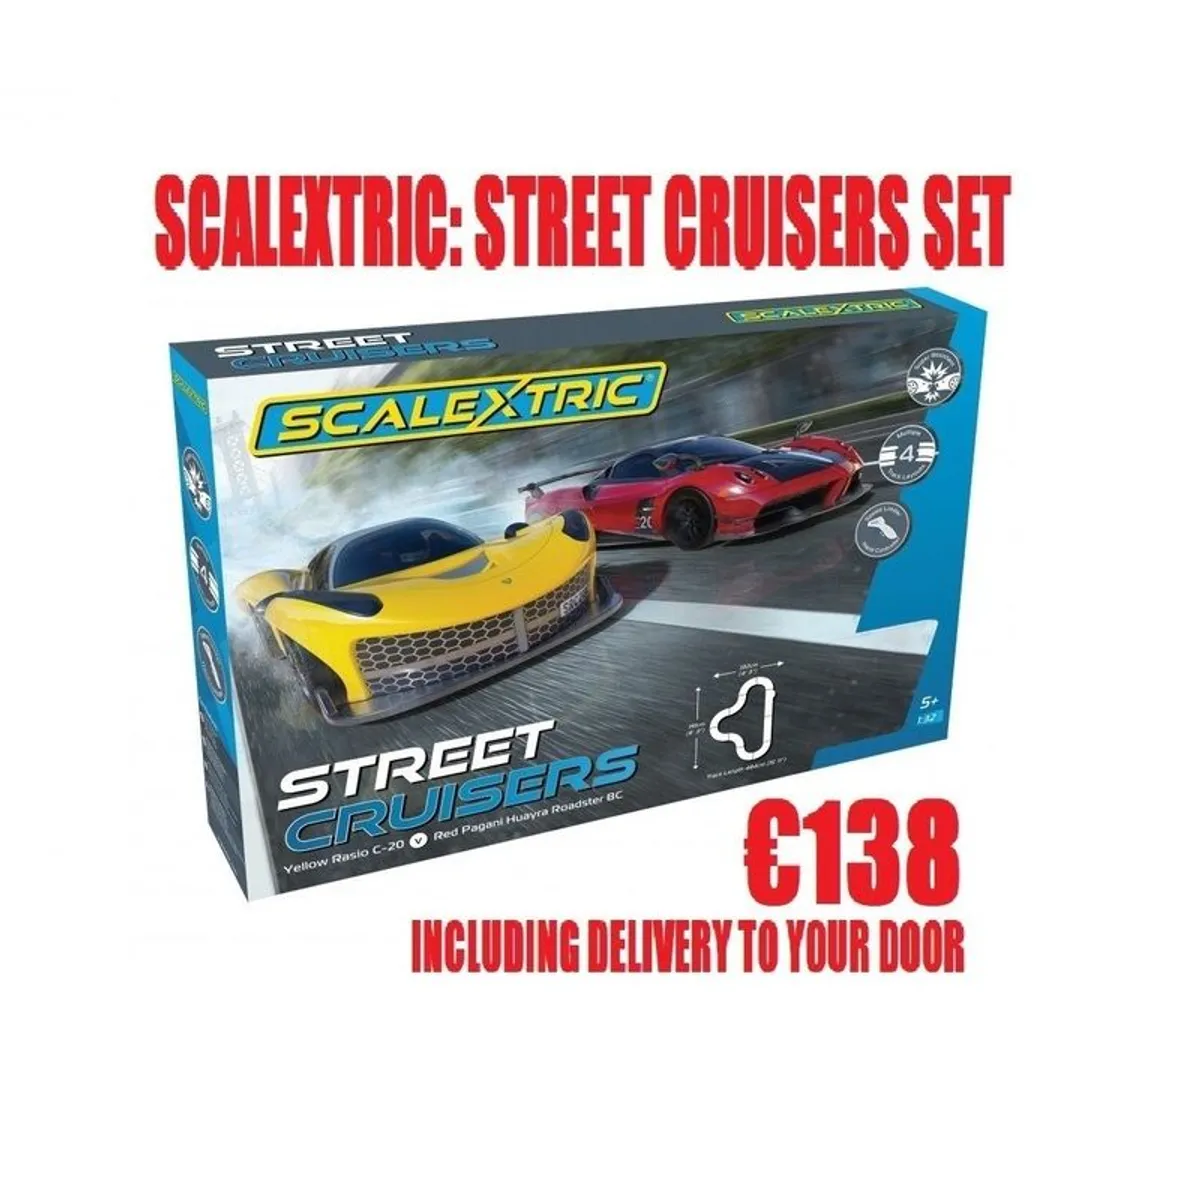 Scalextric New Street Cruisers Race Set. - Image 1